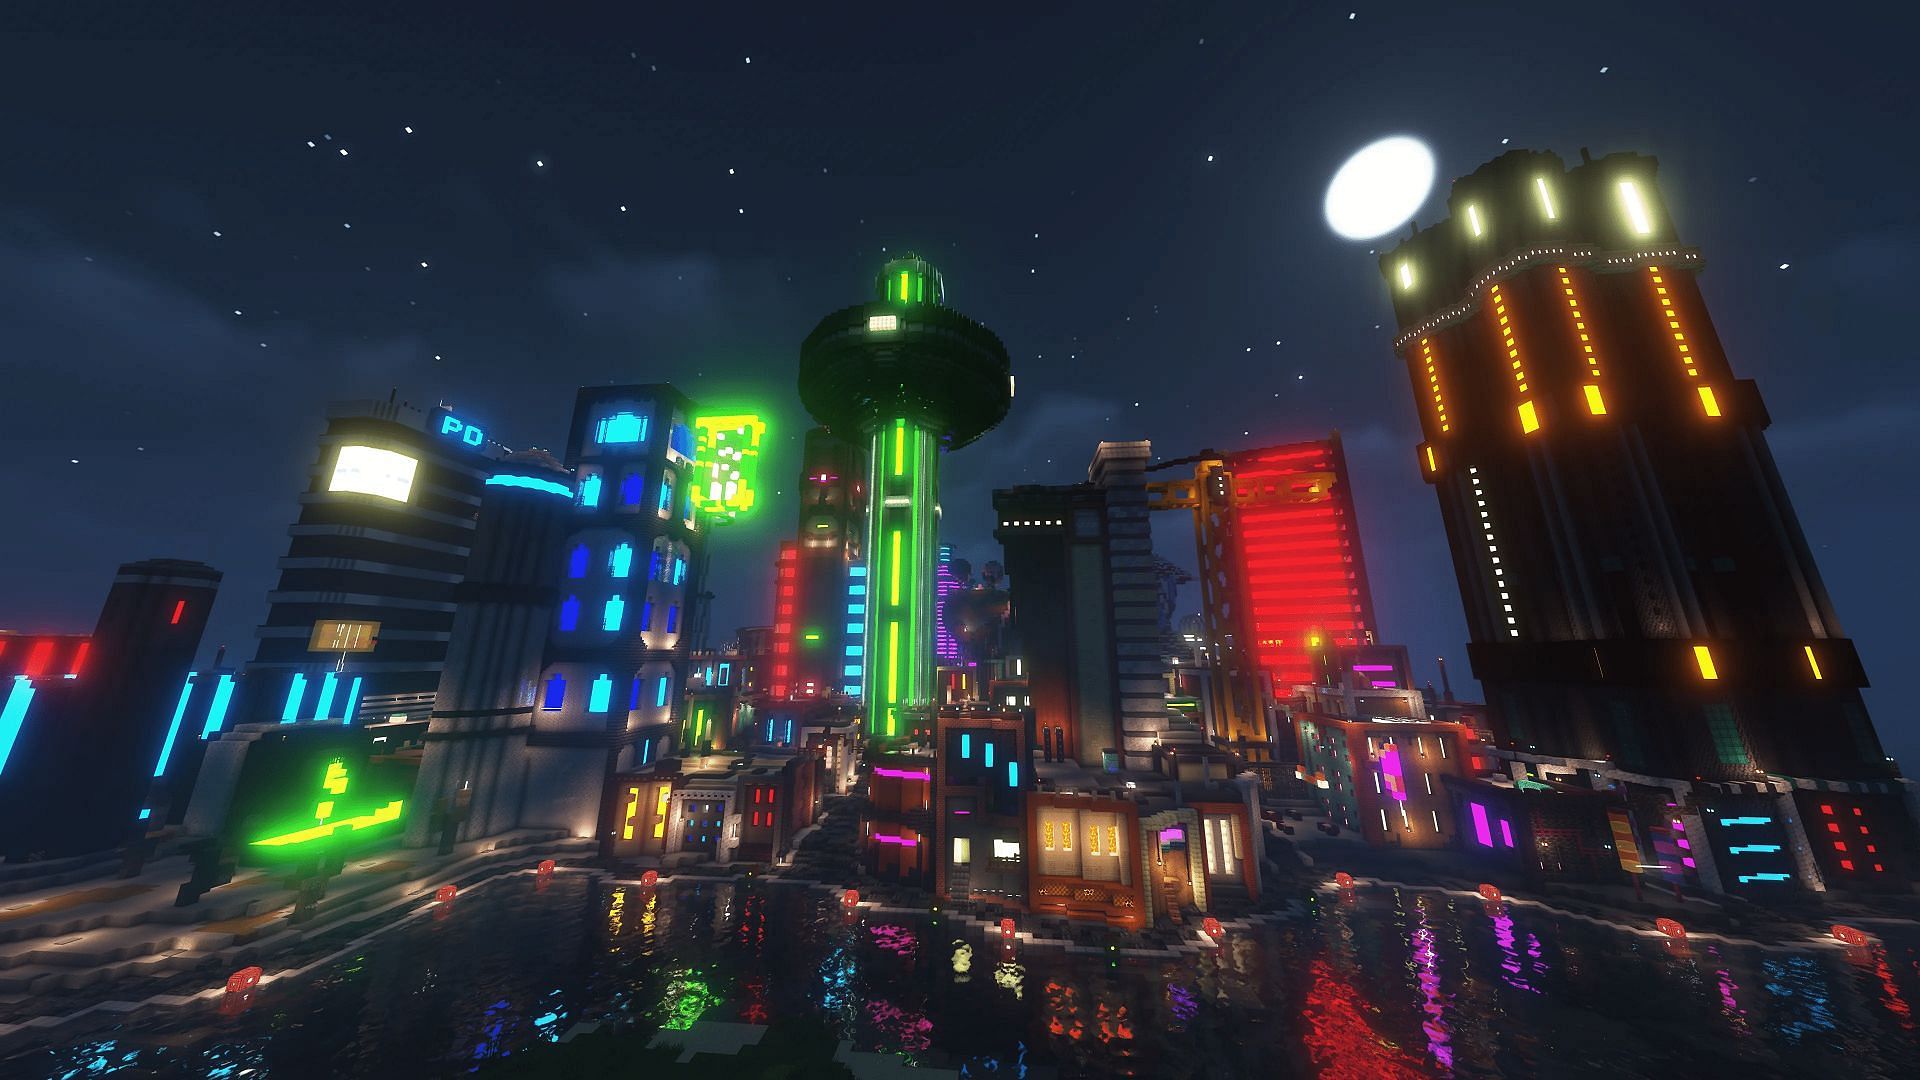 A cyberpunk sci-fi city build created by a Minecraft player.